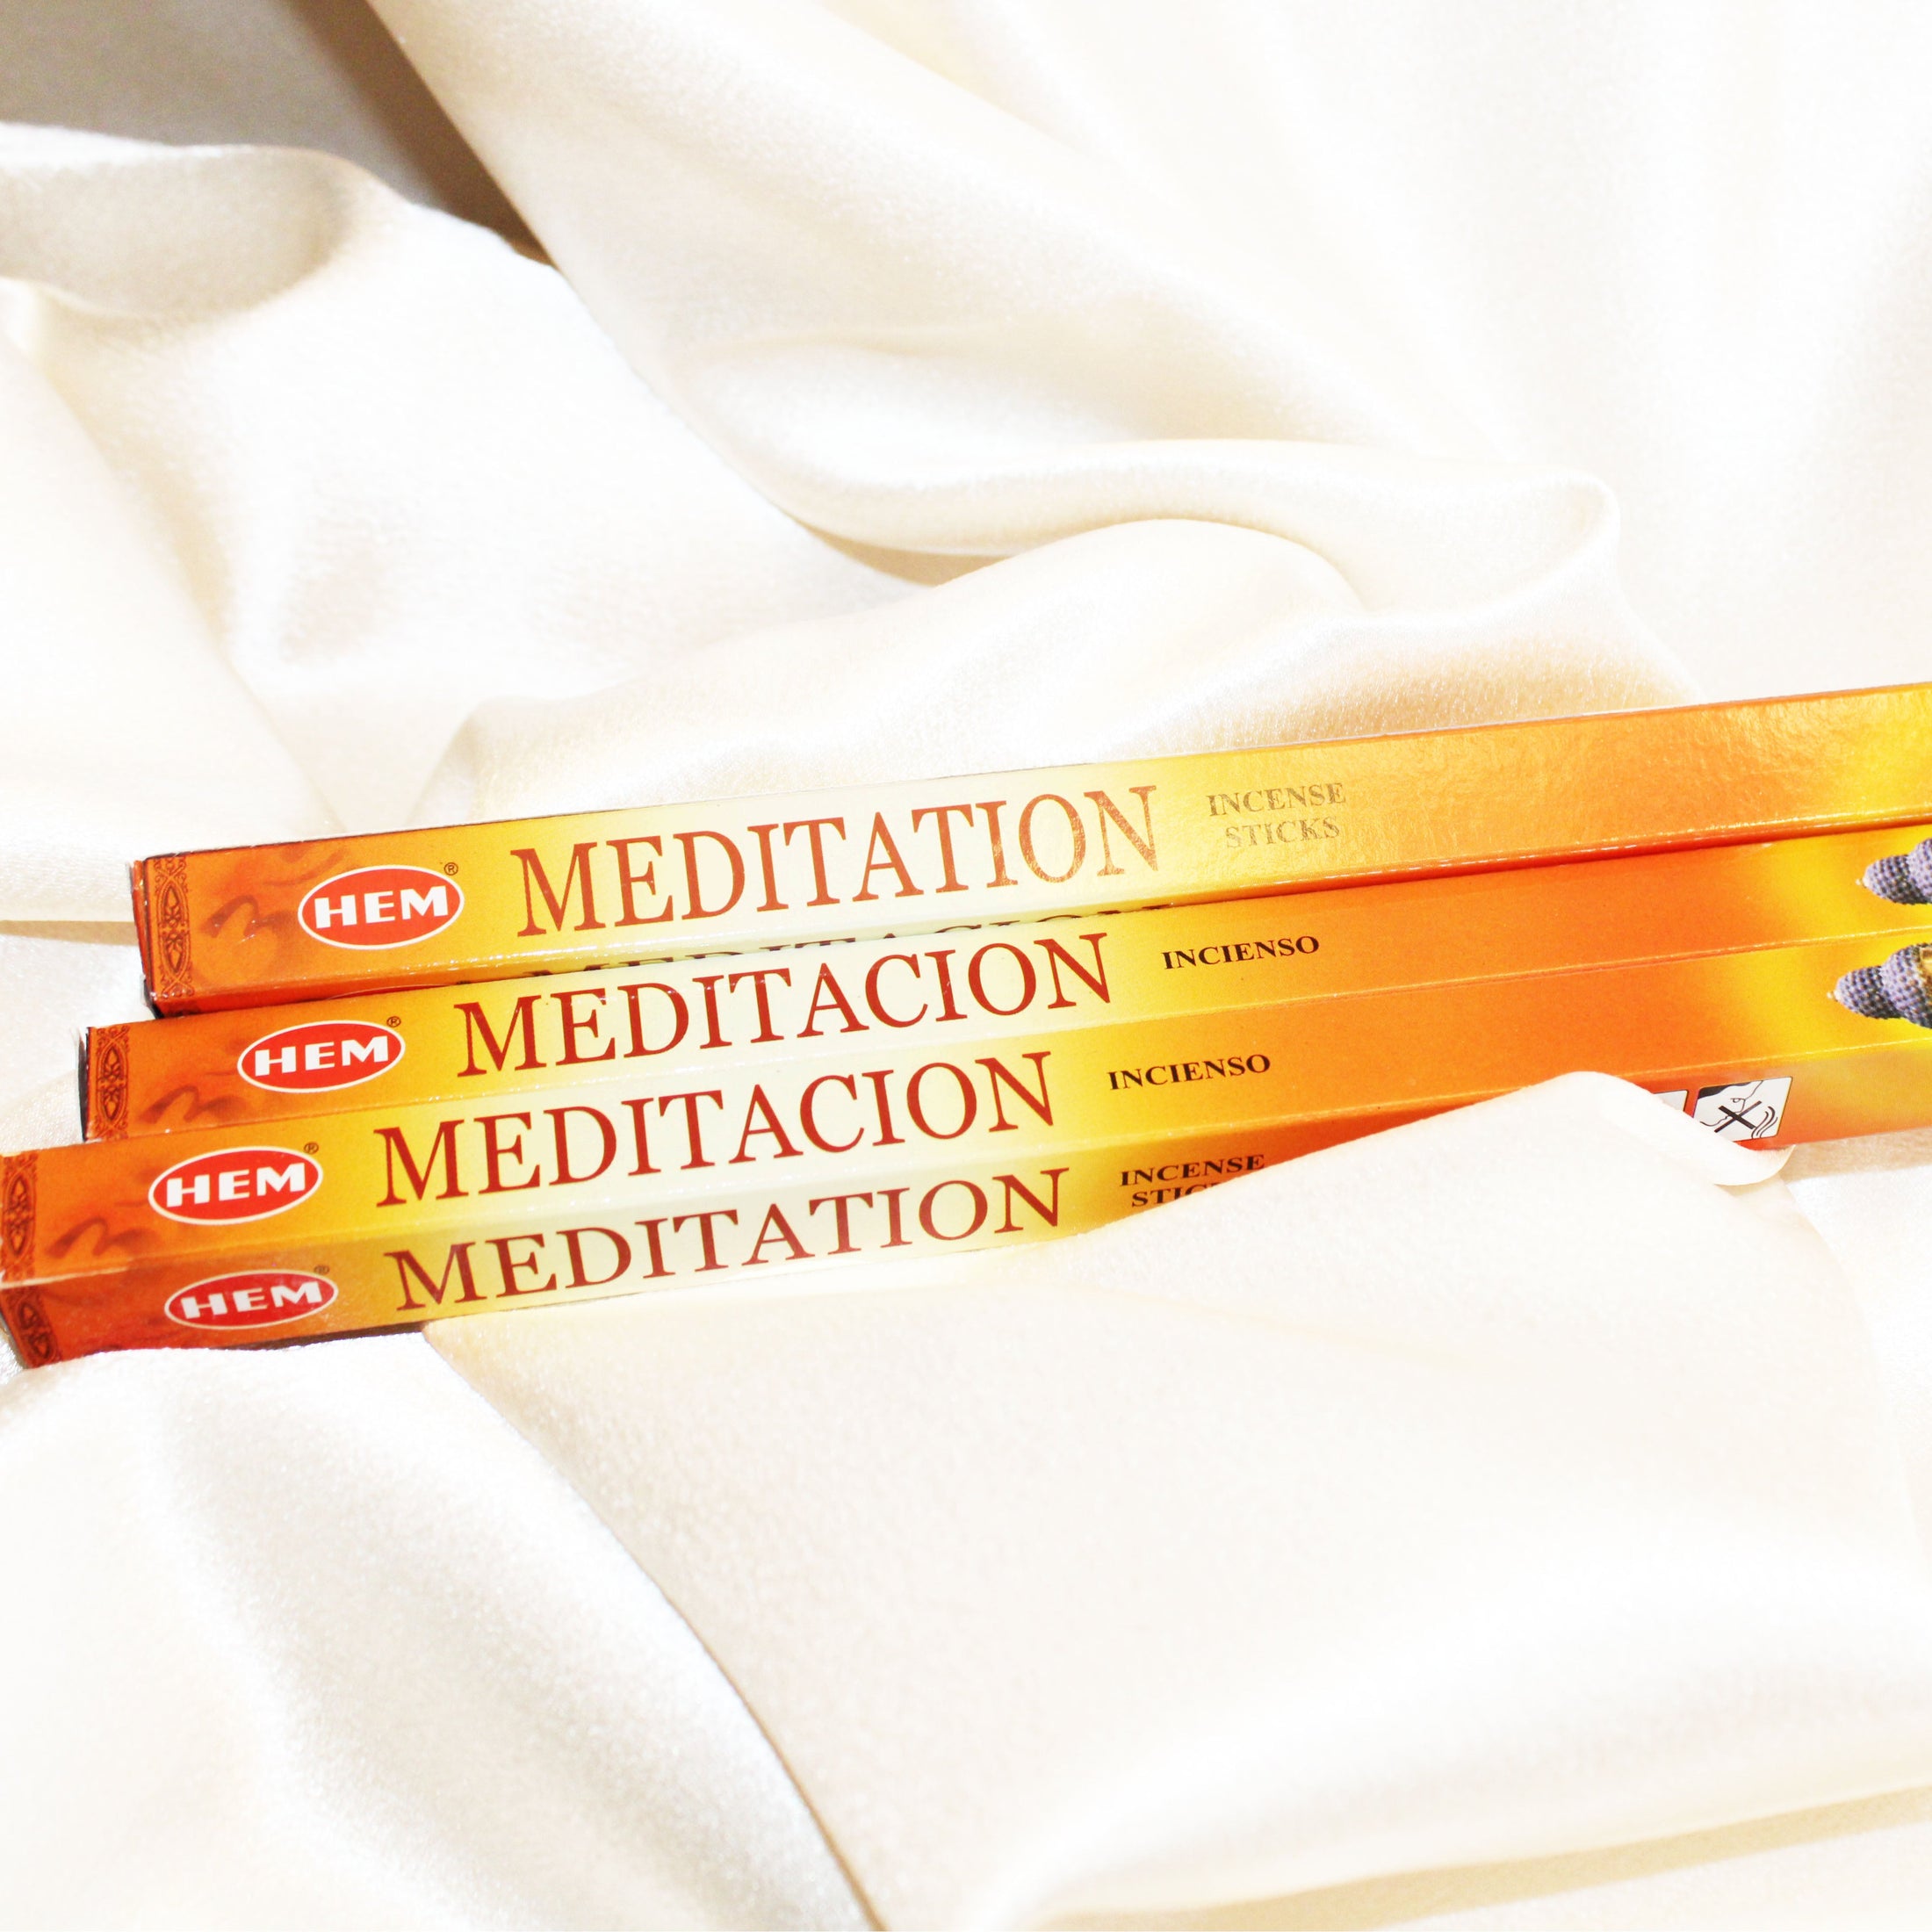 Hem- Meditation (Meditacion) Incense (Incensio) Sticks